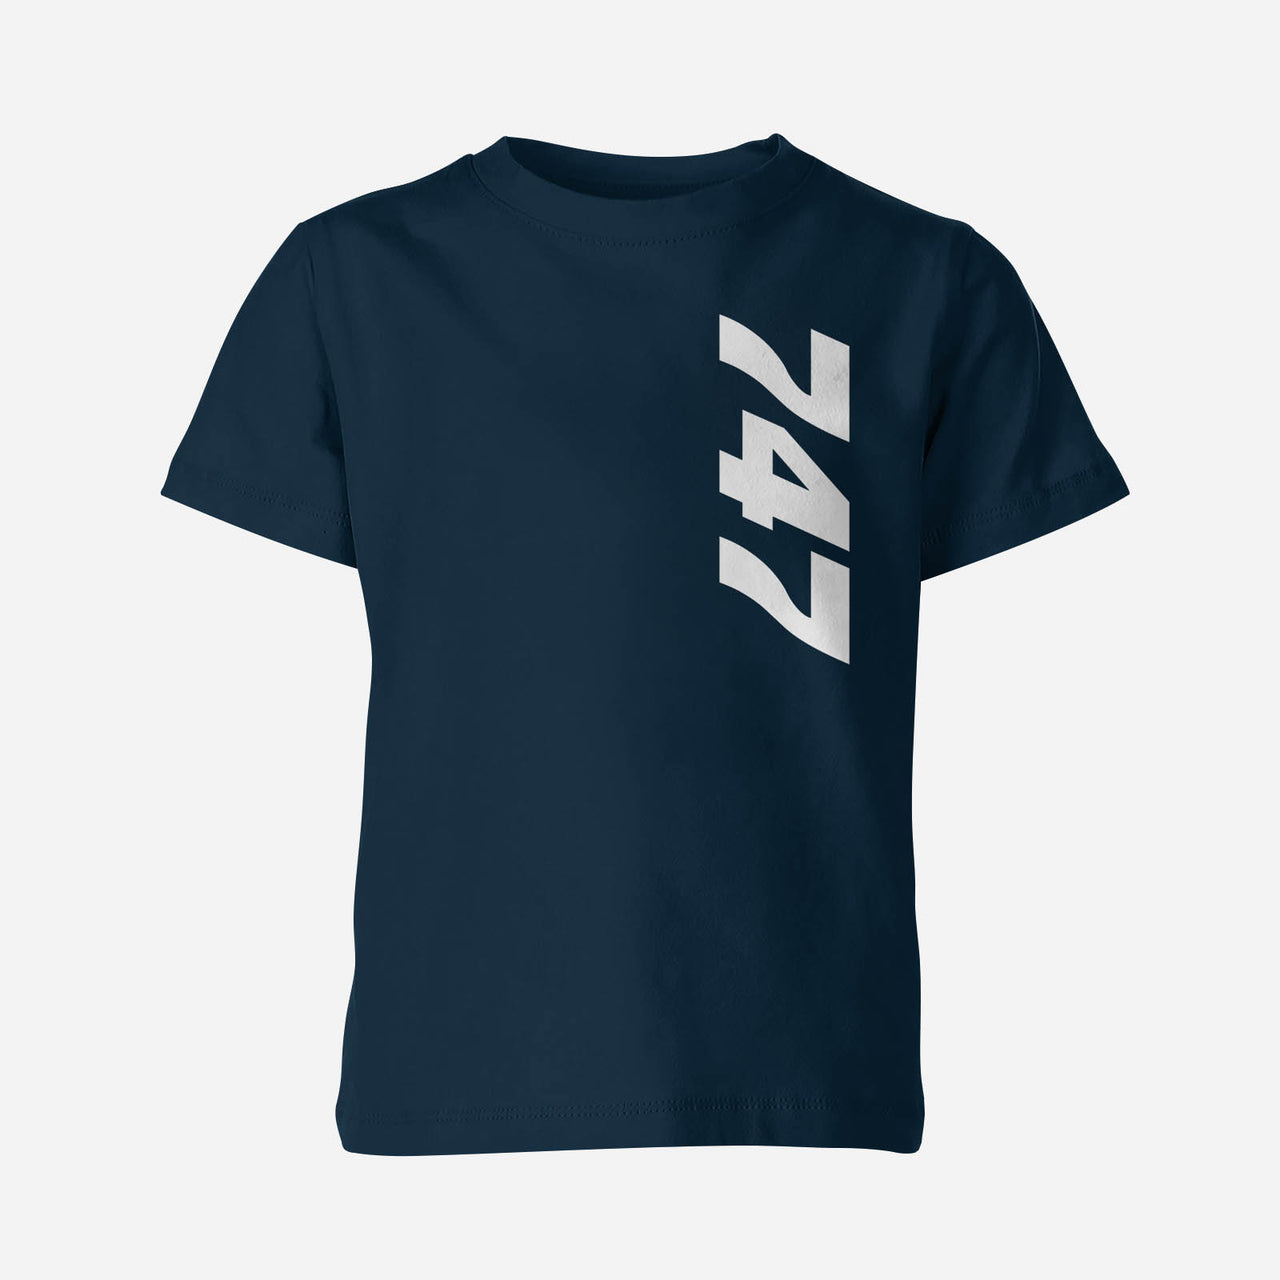 747 Side Text Designed Children T-Shirts